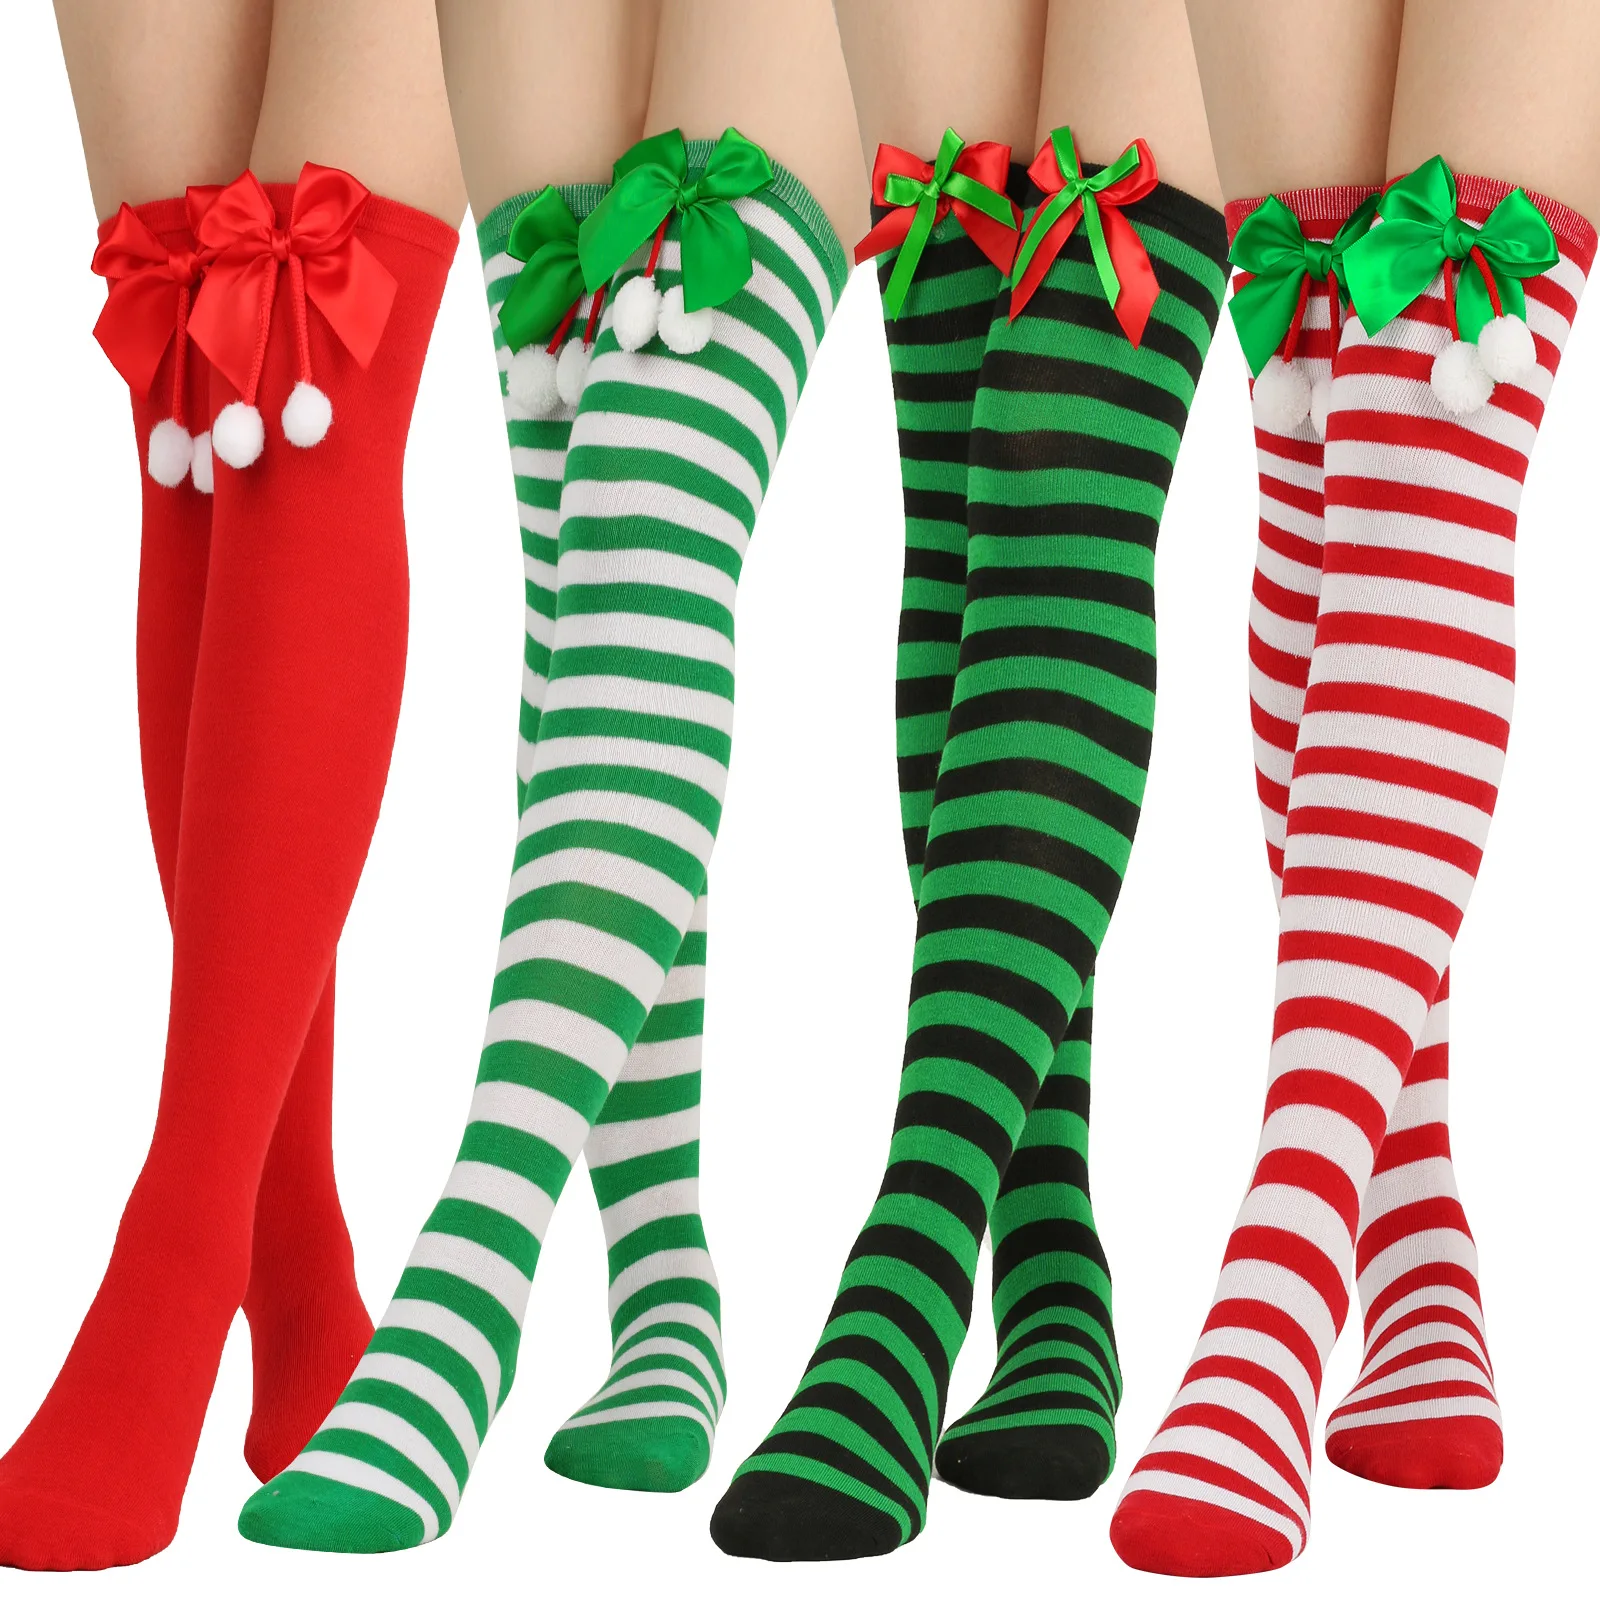 Bow Christmas Socks Ball Ball Socks Knee High Socks Women's Long Christmas Day Striped Stockings